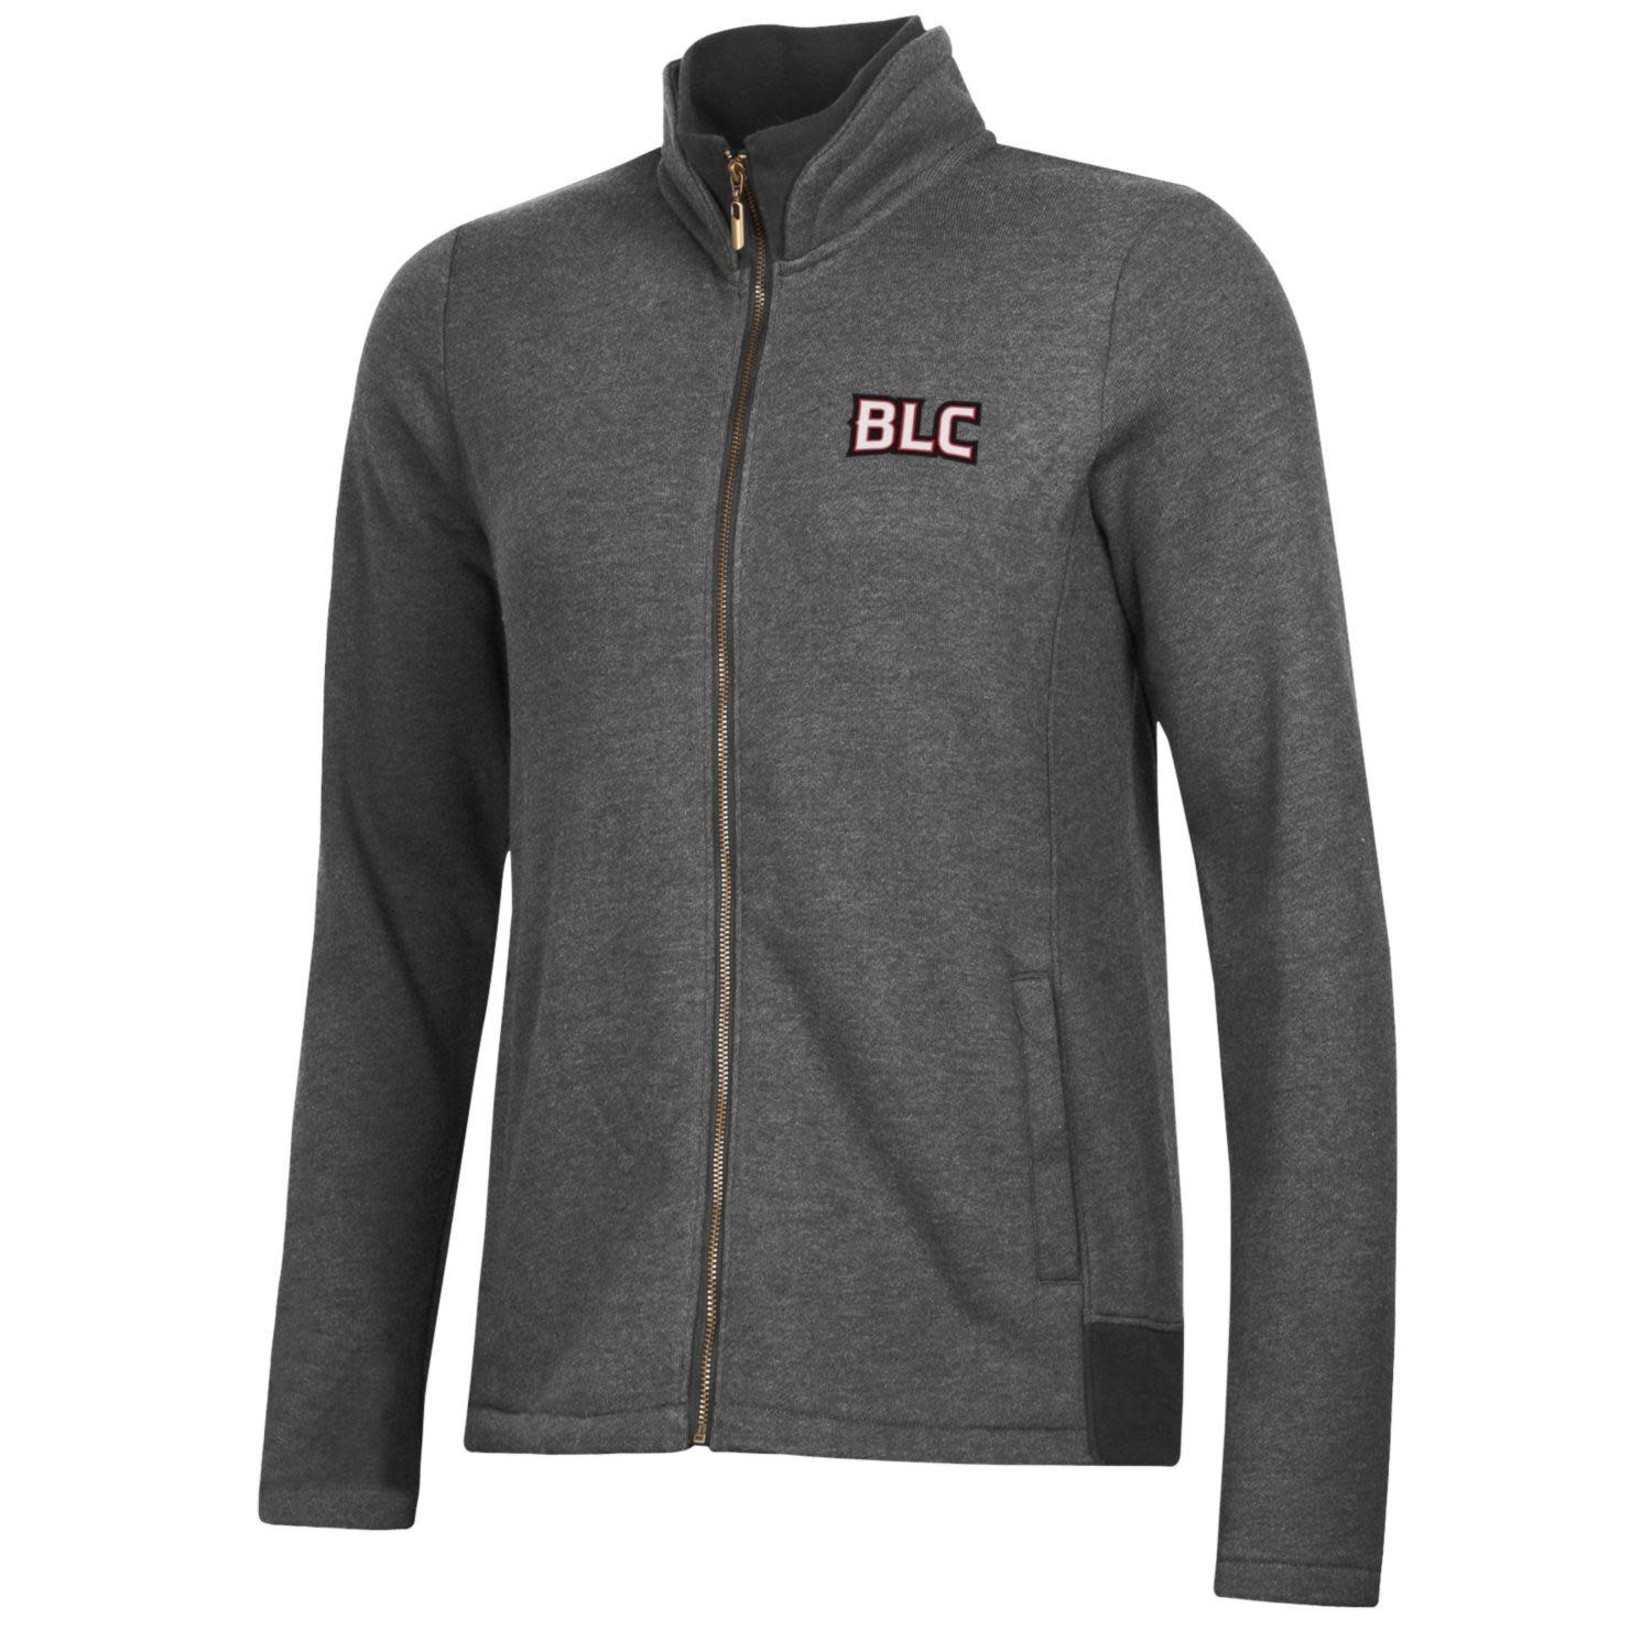 Gear Relaxed Luxe Full Zip Sweatshirt - Charcoal/Granite Heather